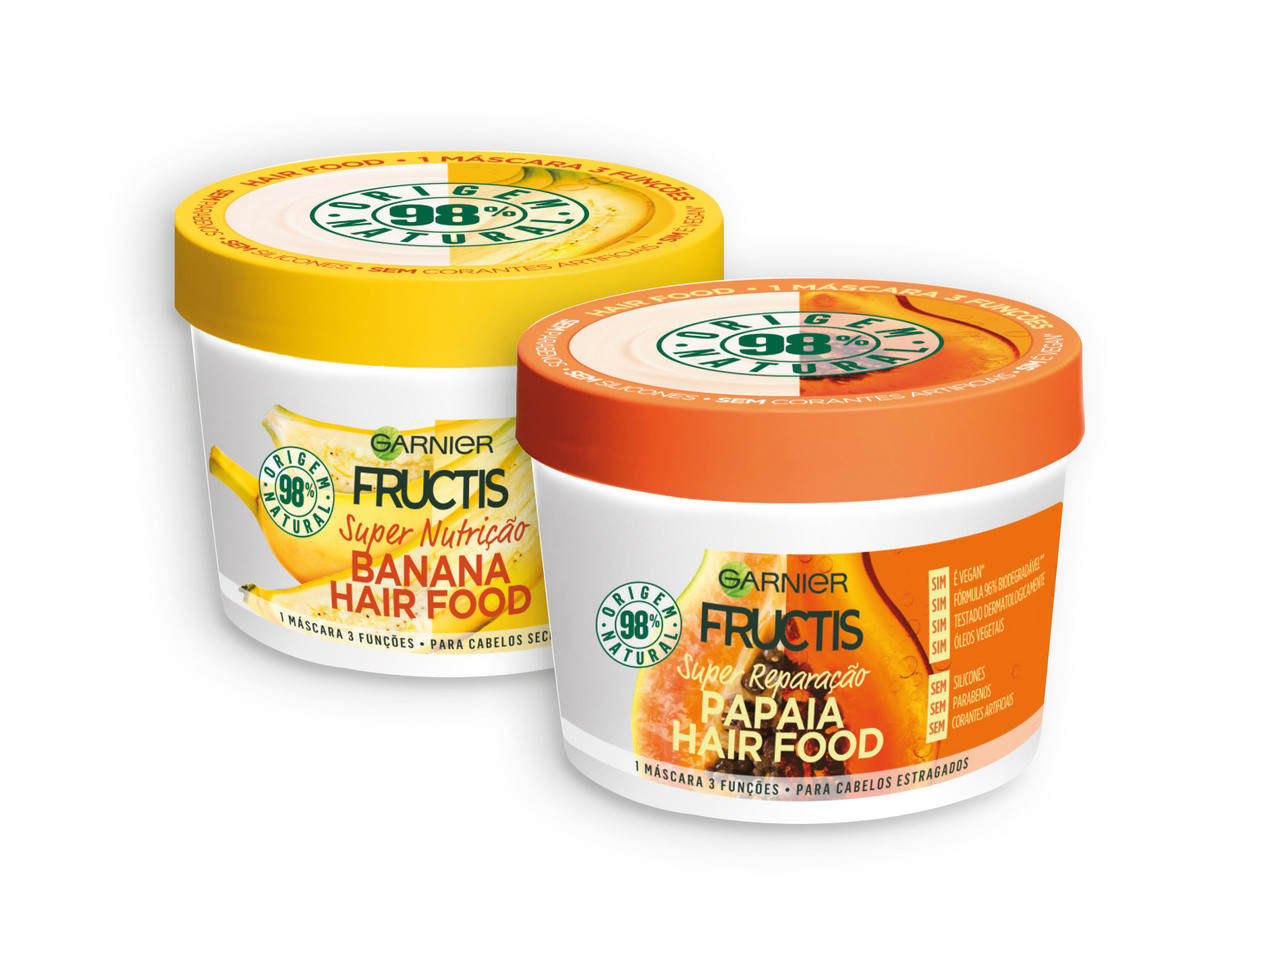 GARNIER(R) Fructis Hair Food